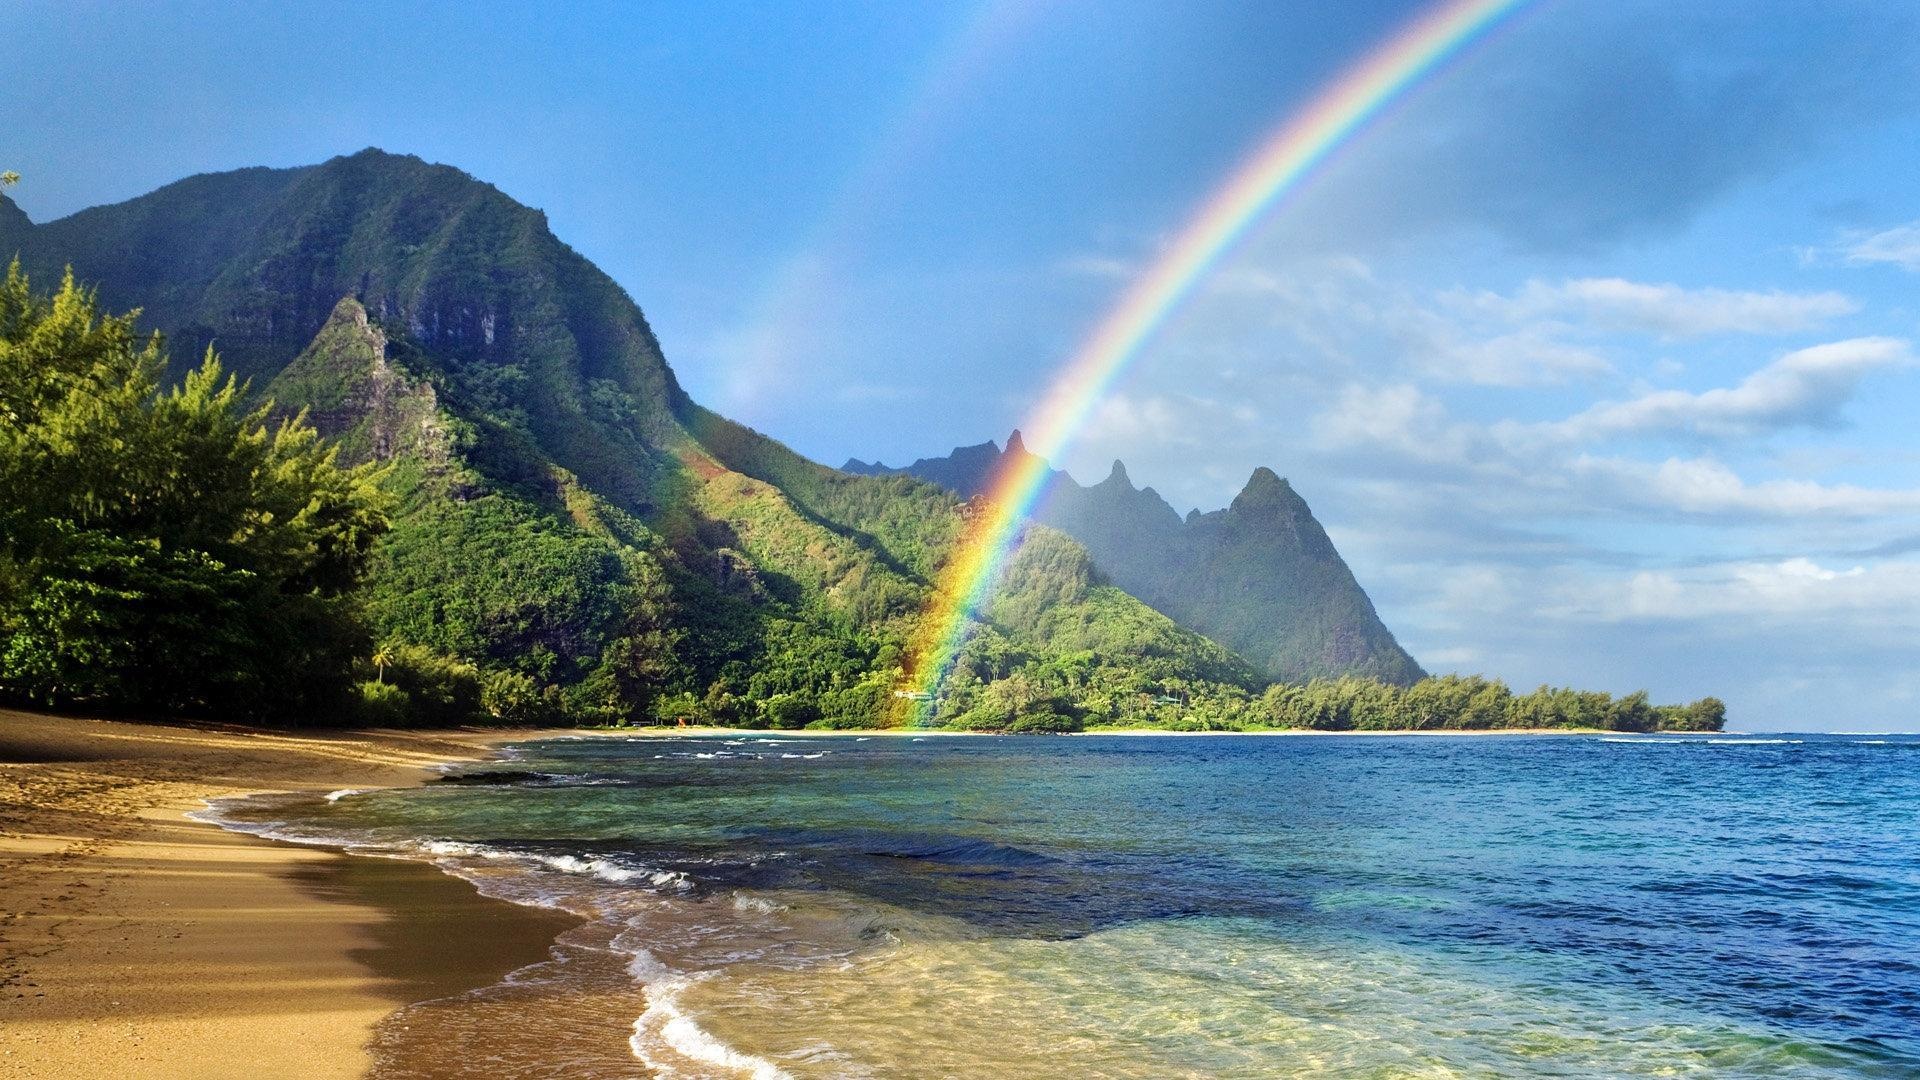 Hawaiian Islands, Stunning wallpapers, Picturesque scenery, Ethereal beauty, 1920x1080 Full HD Desktop